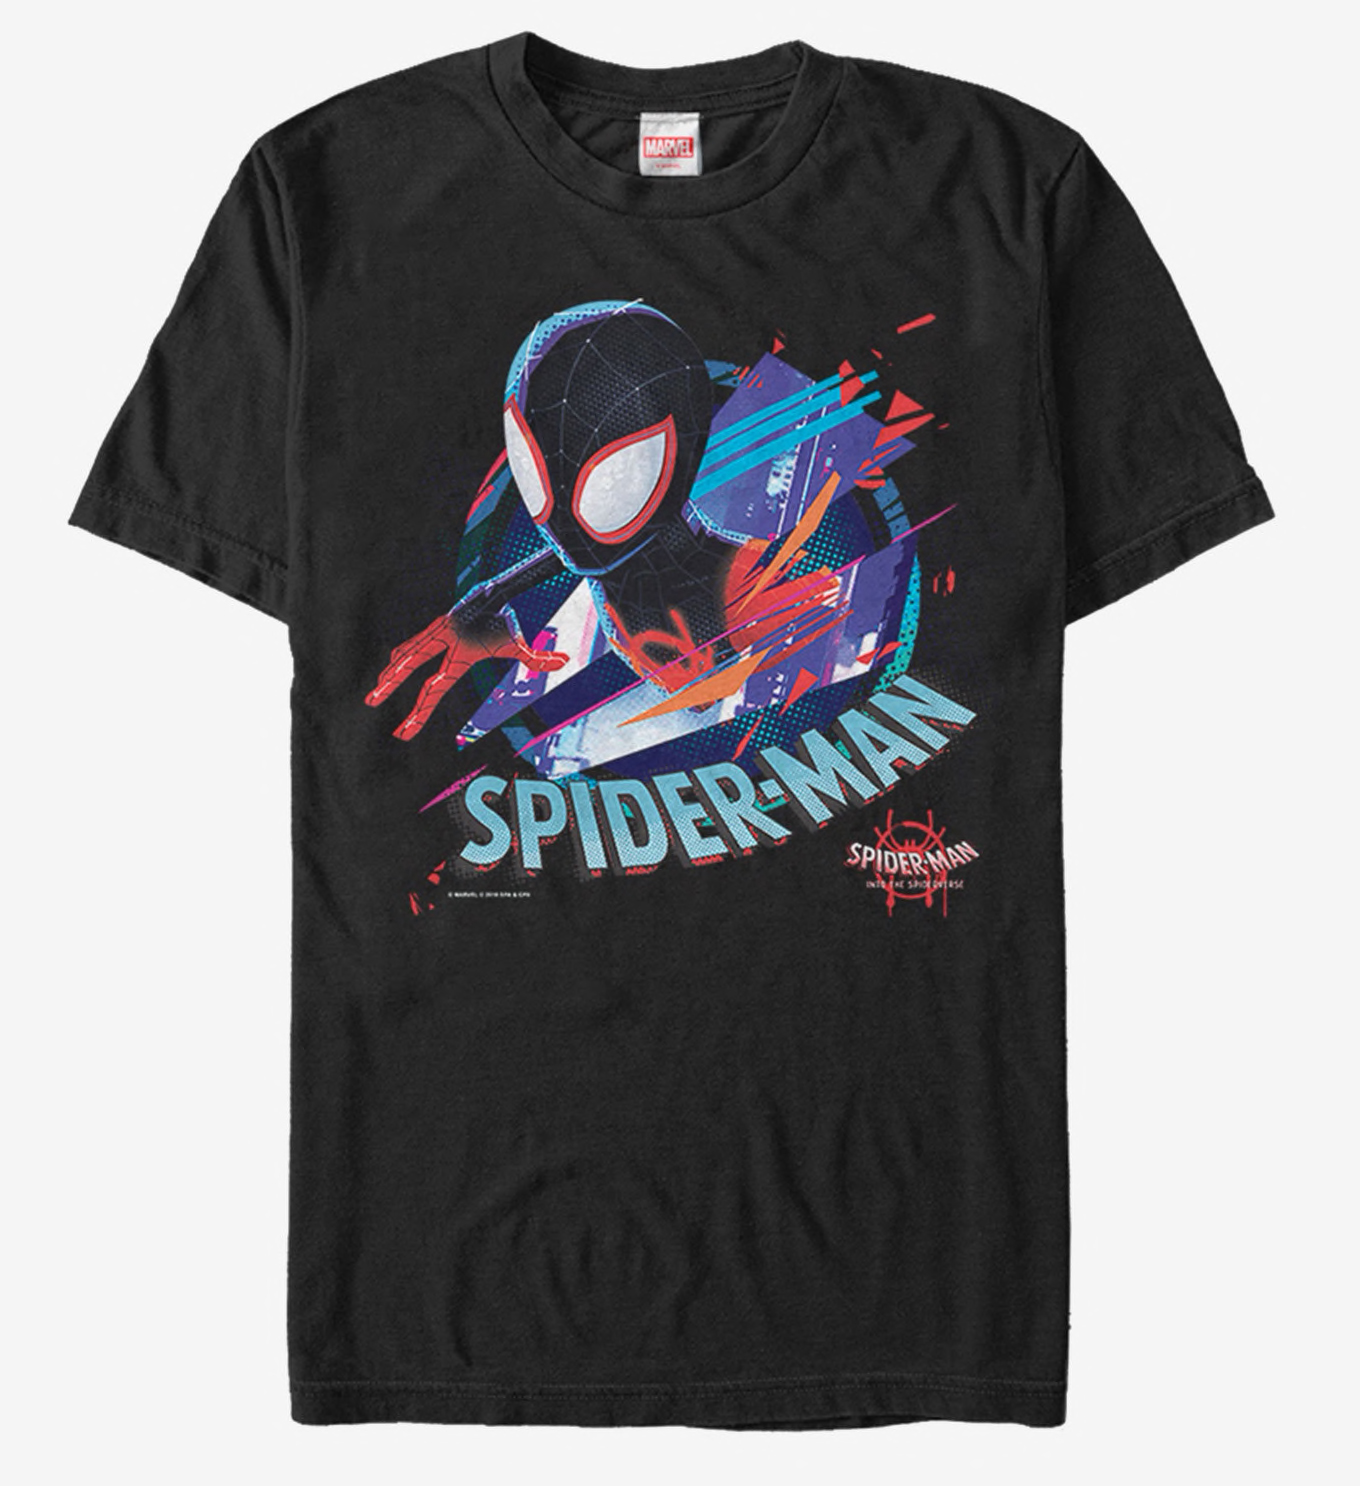 spiderman-spider-verse-shirt-match-jordan-1-origin-story-6